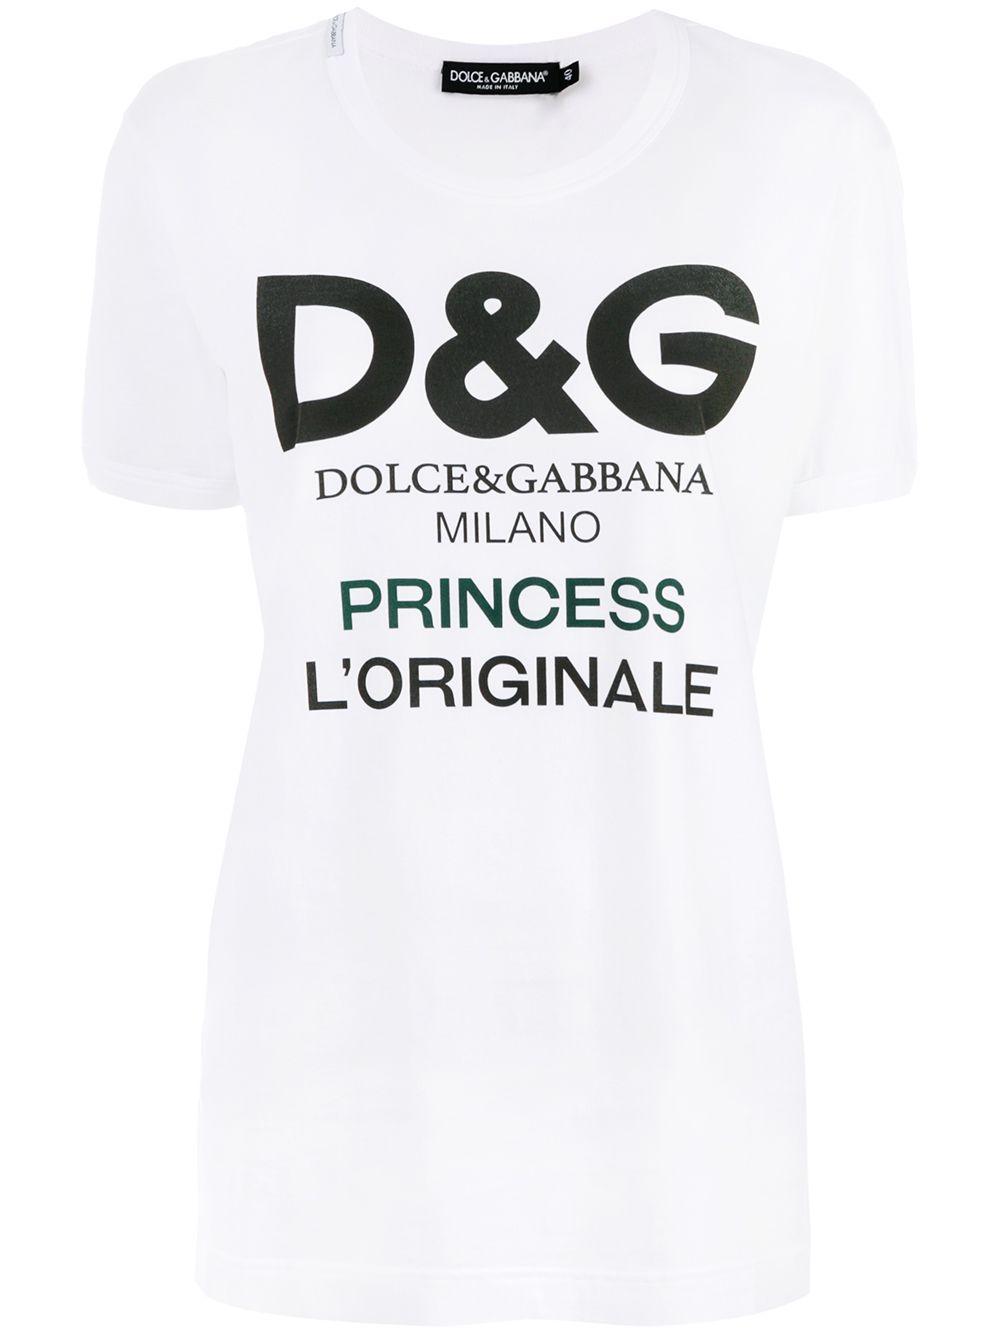 Dolce & Gabbana Princess L'originale T-shirt in White | Lyst